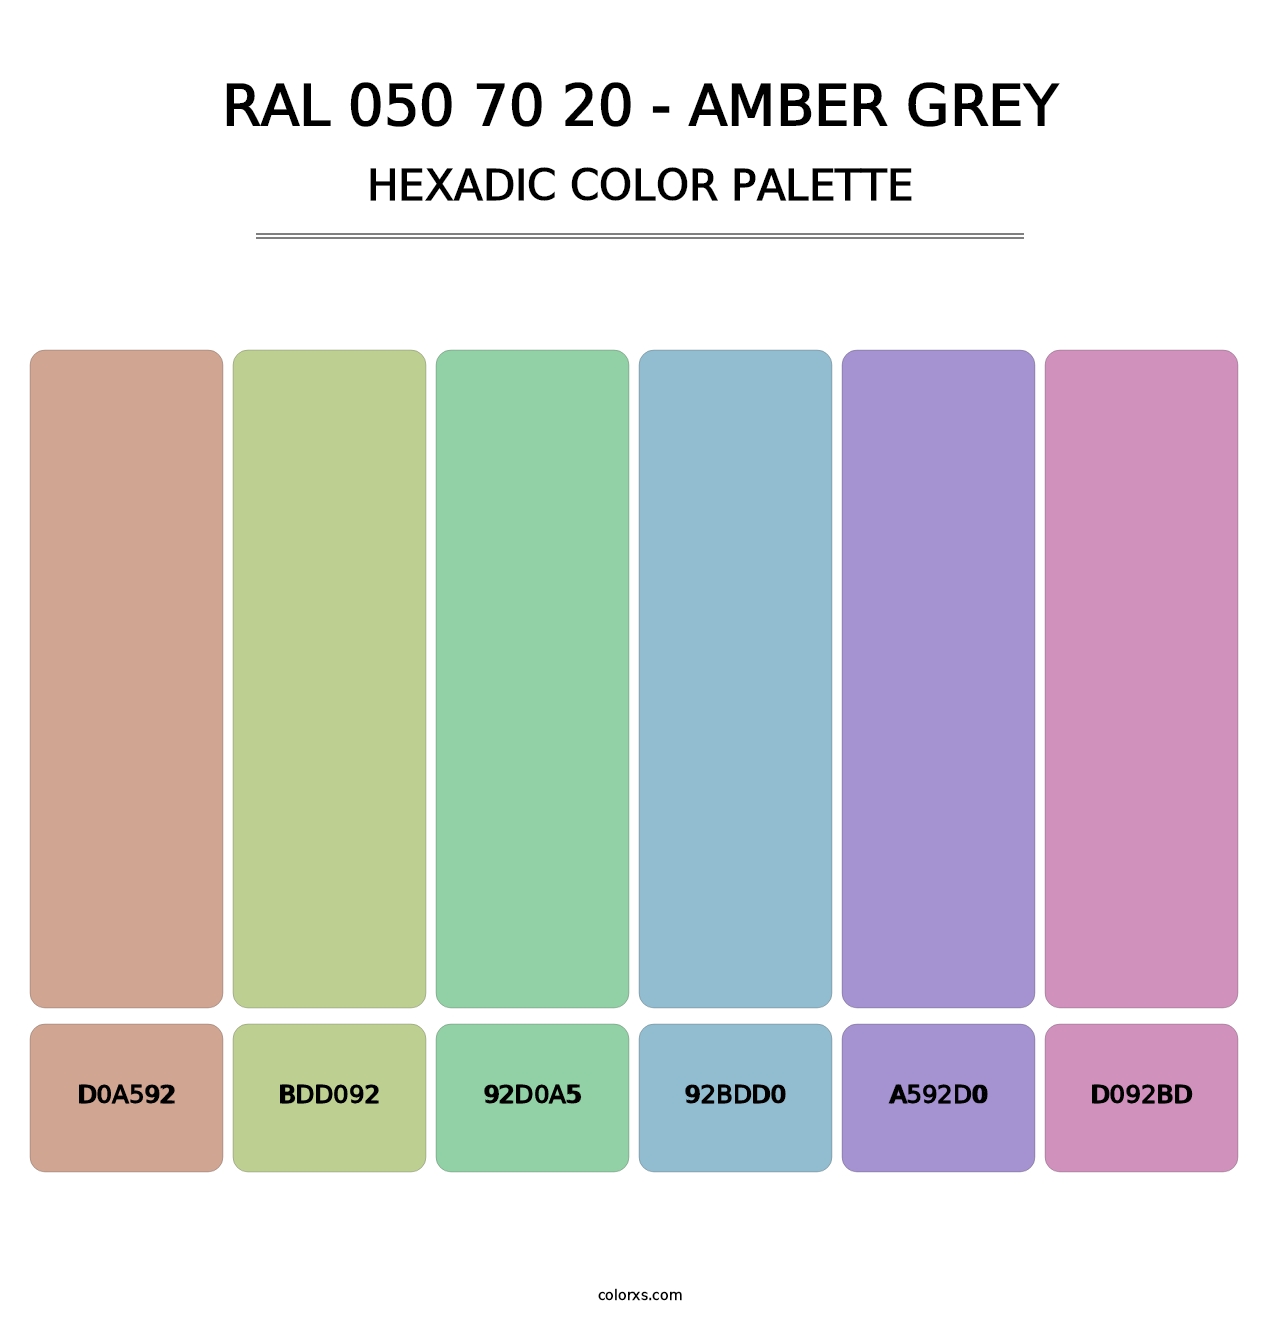 RAL 050 70 20 - Amber Grey - Hexadic Color Palette